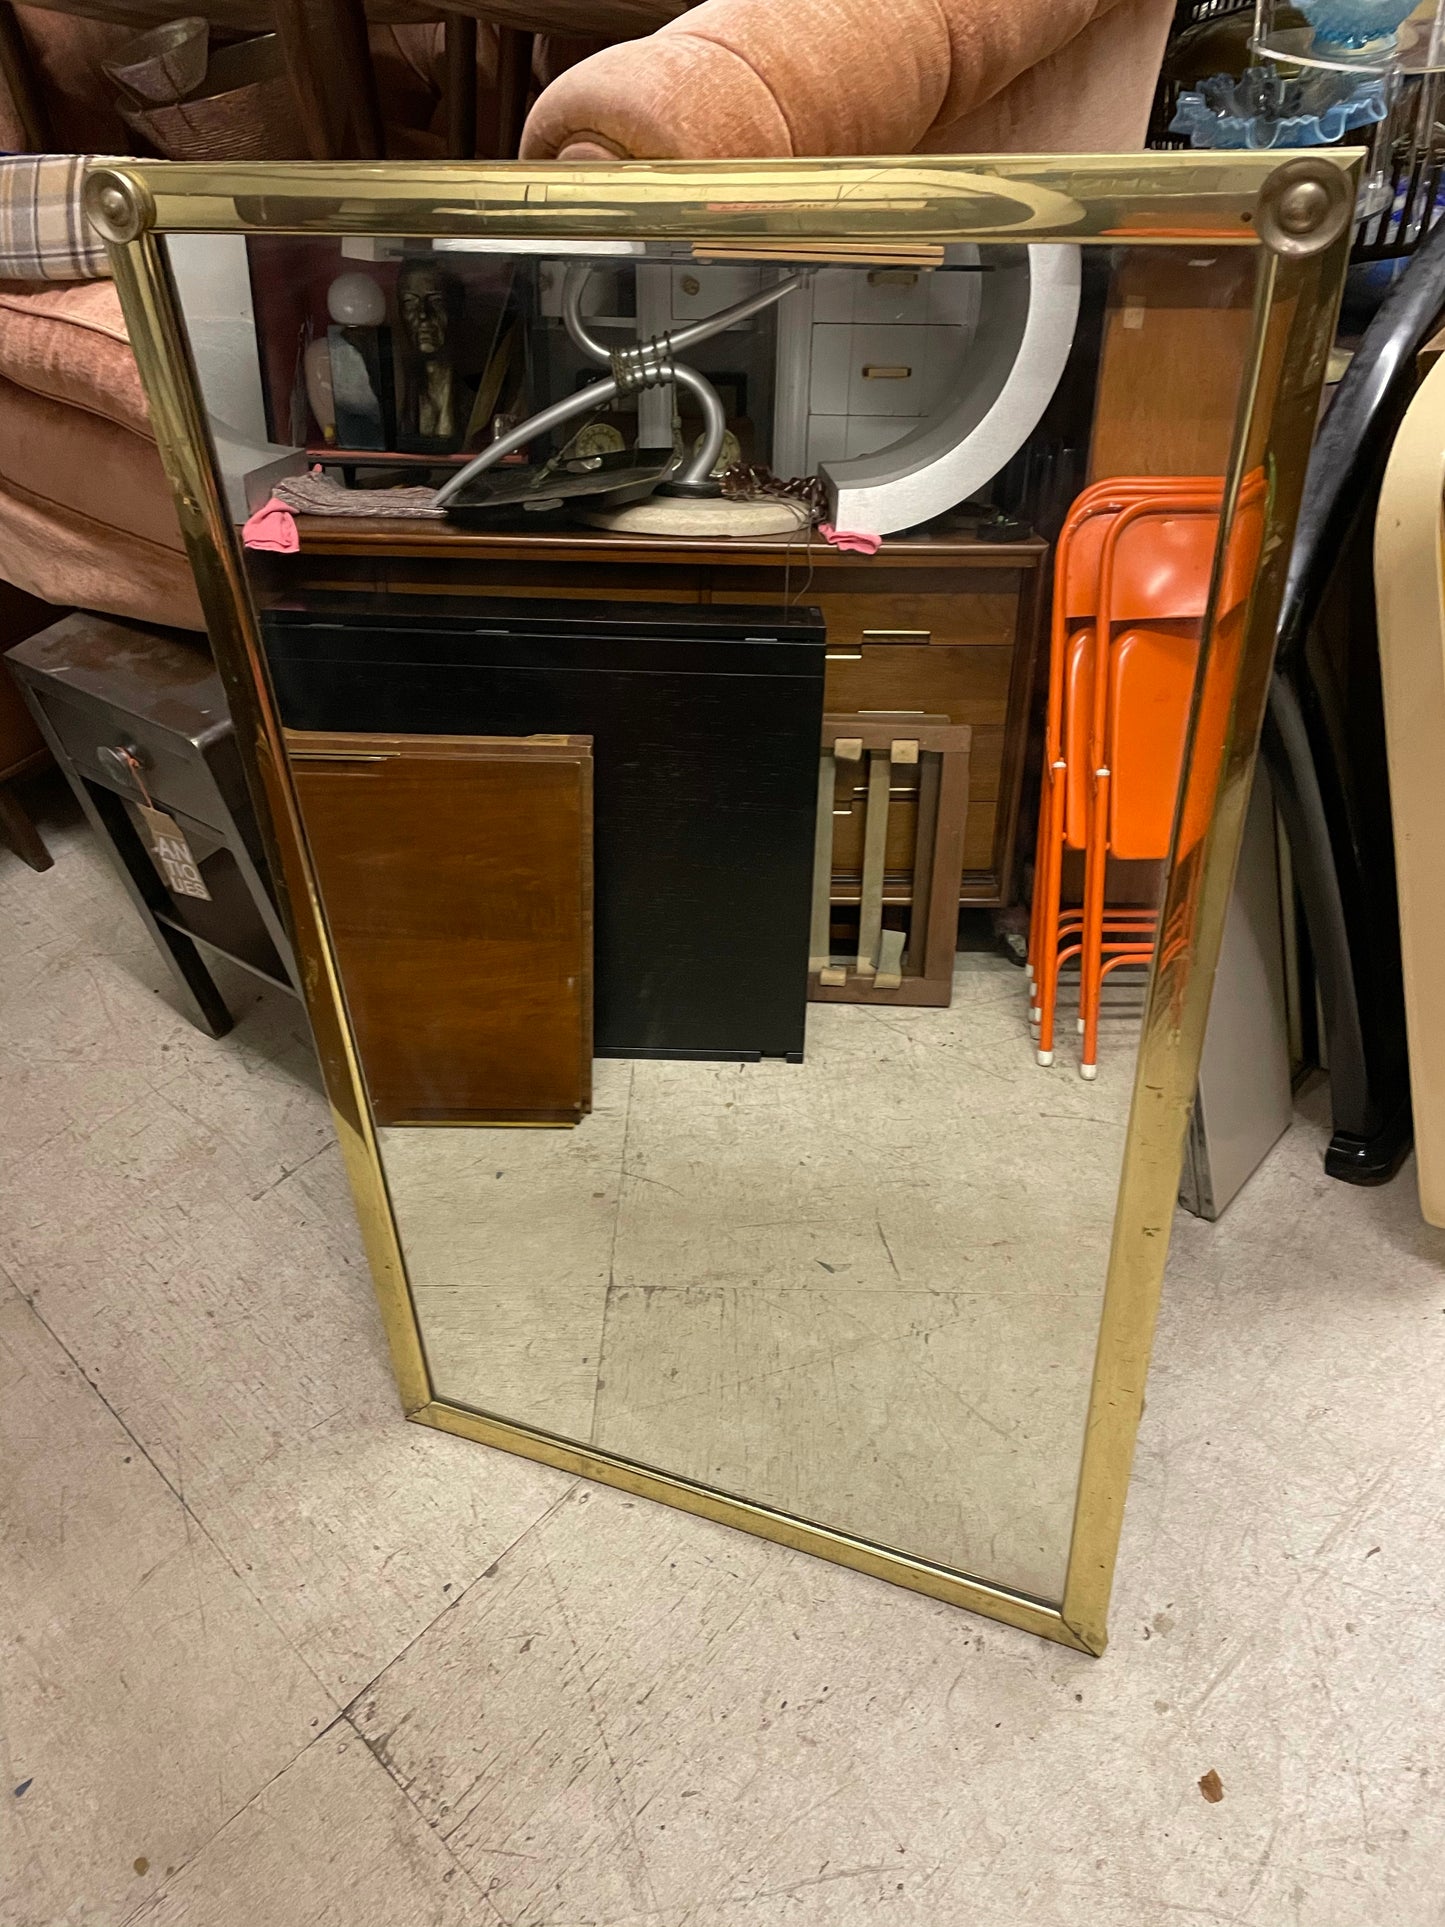 Oversized Brass Framed Mirror with Art Deco Detail - 33x53”